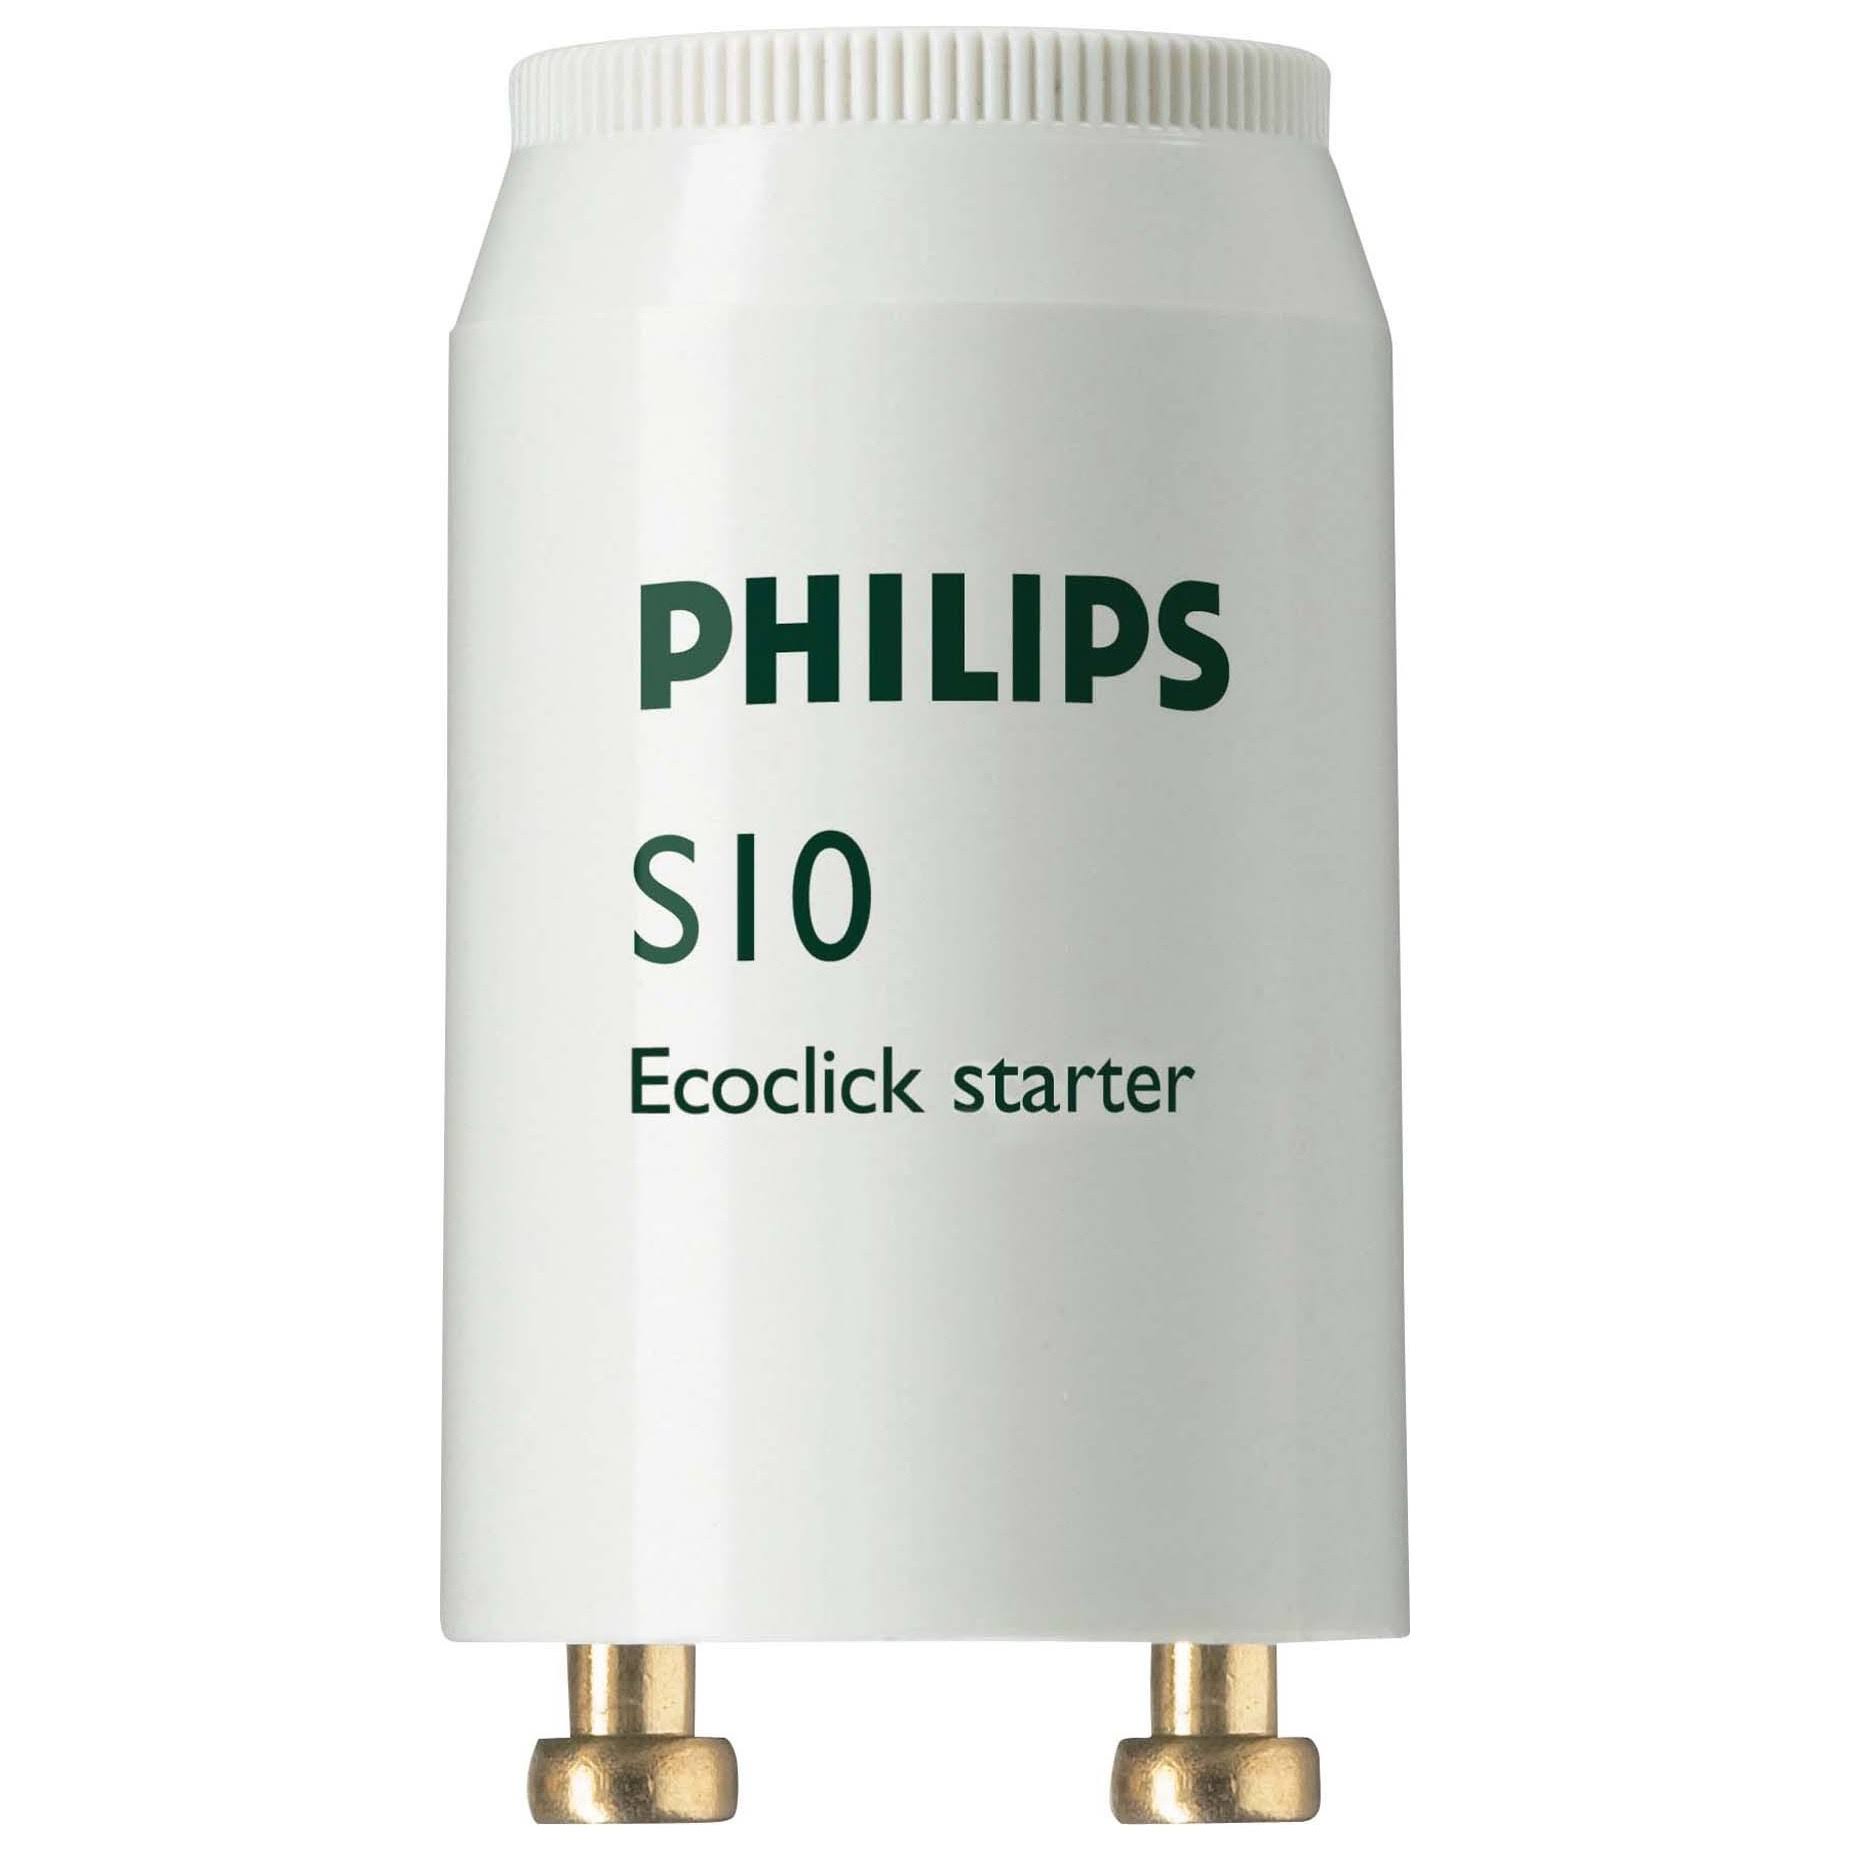 Philips S10 Ecoclick Starter - 65w